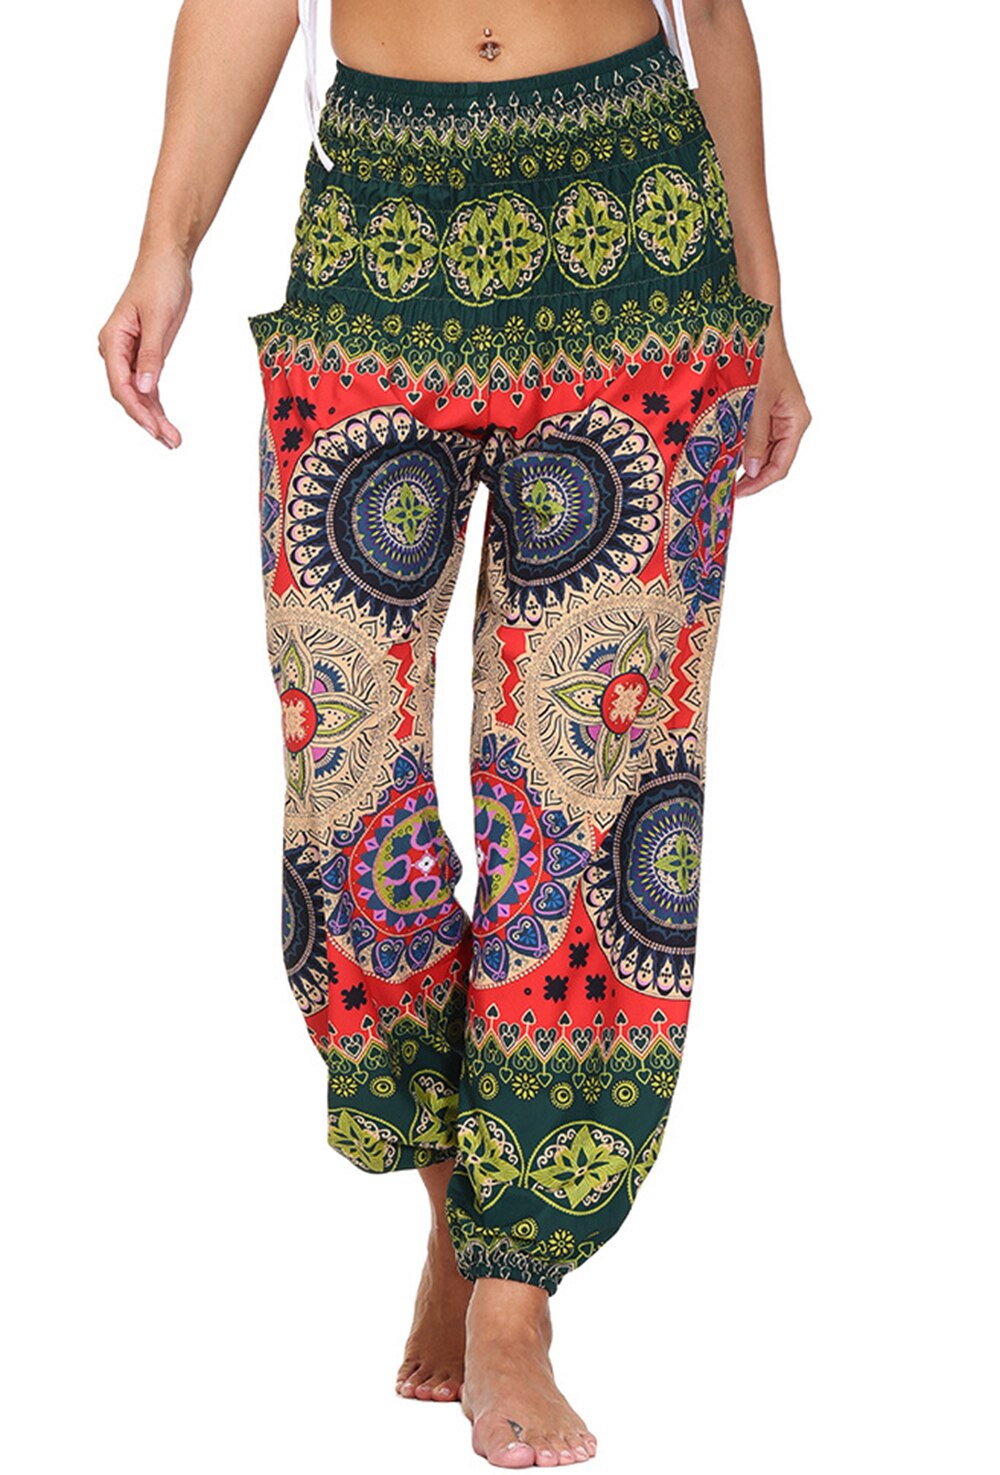 Pantaloni da donna Harem pantaloni da Yoga indiani bohémien a vita alta Smocked pantaloni larghi Boho Hippie con tasche: Default Title